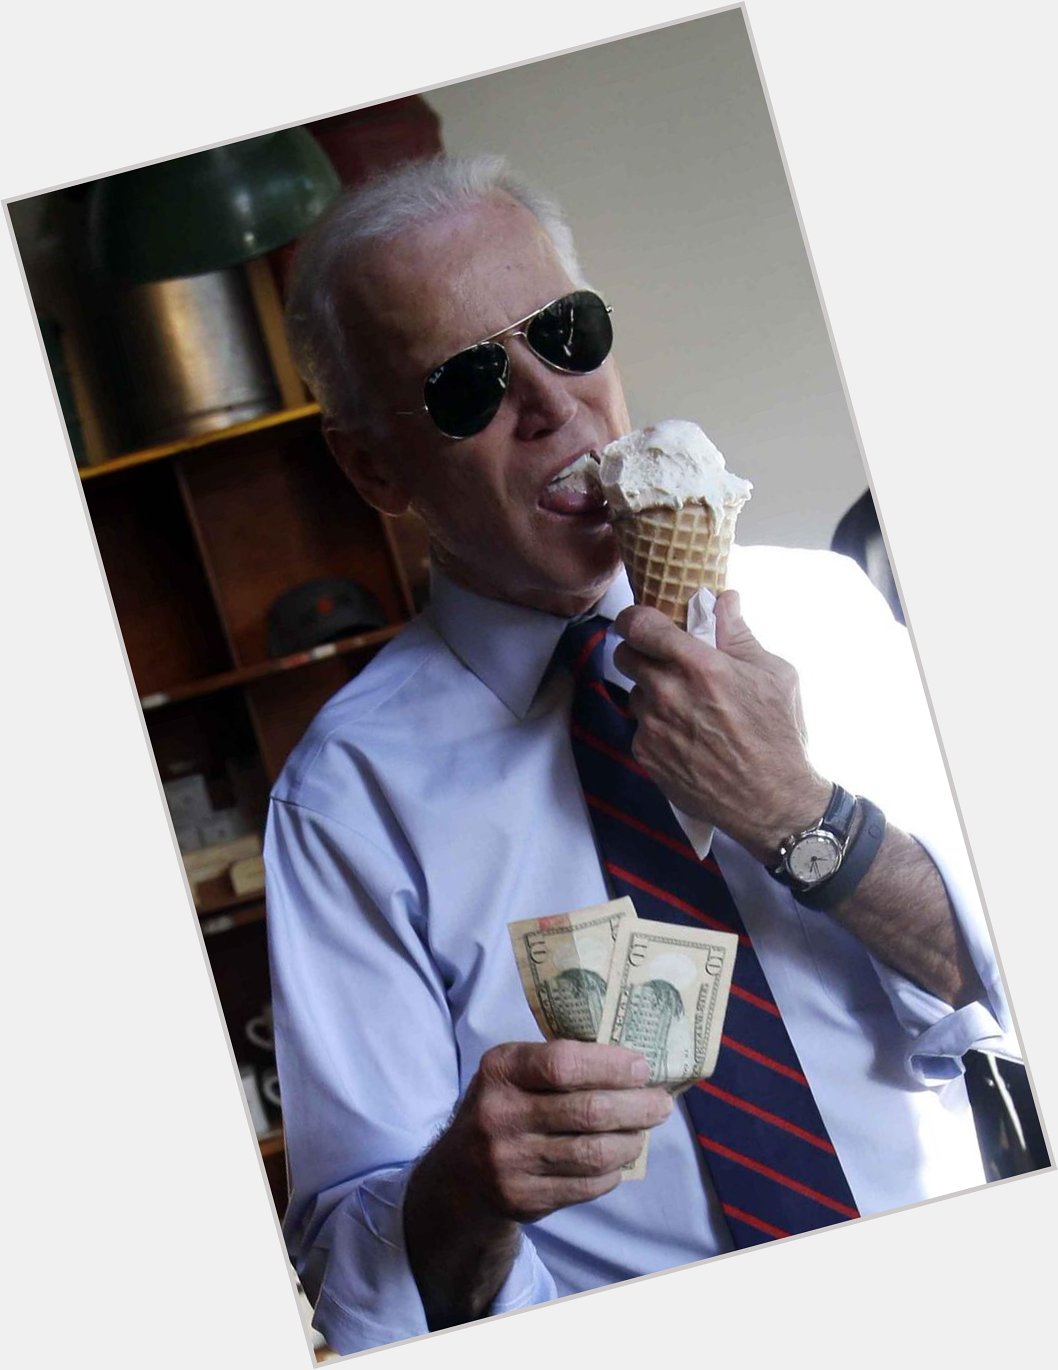 Happy Birthday to Joe Biden! I hope it is filled with ice cream. 